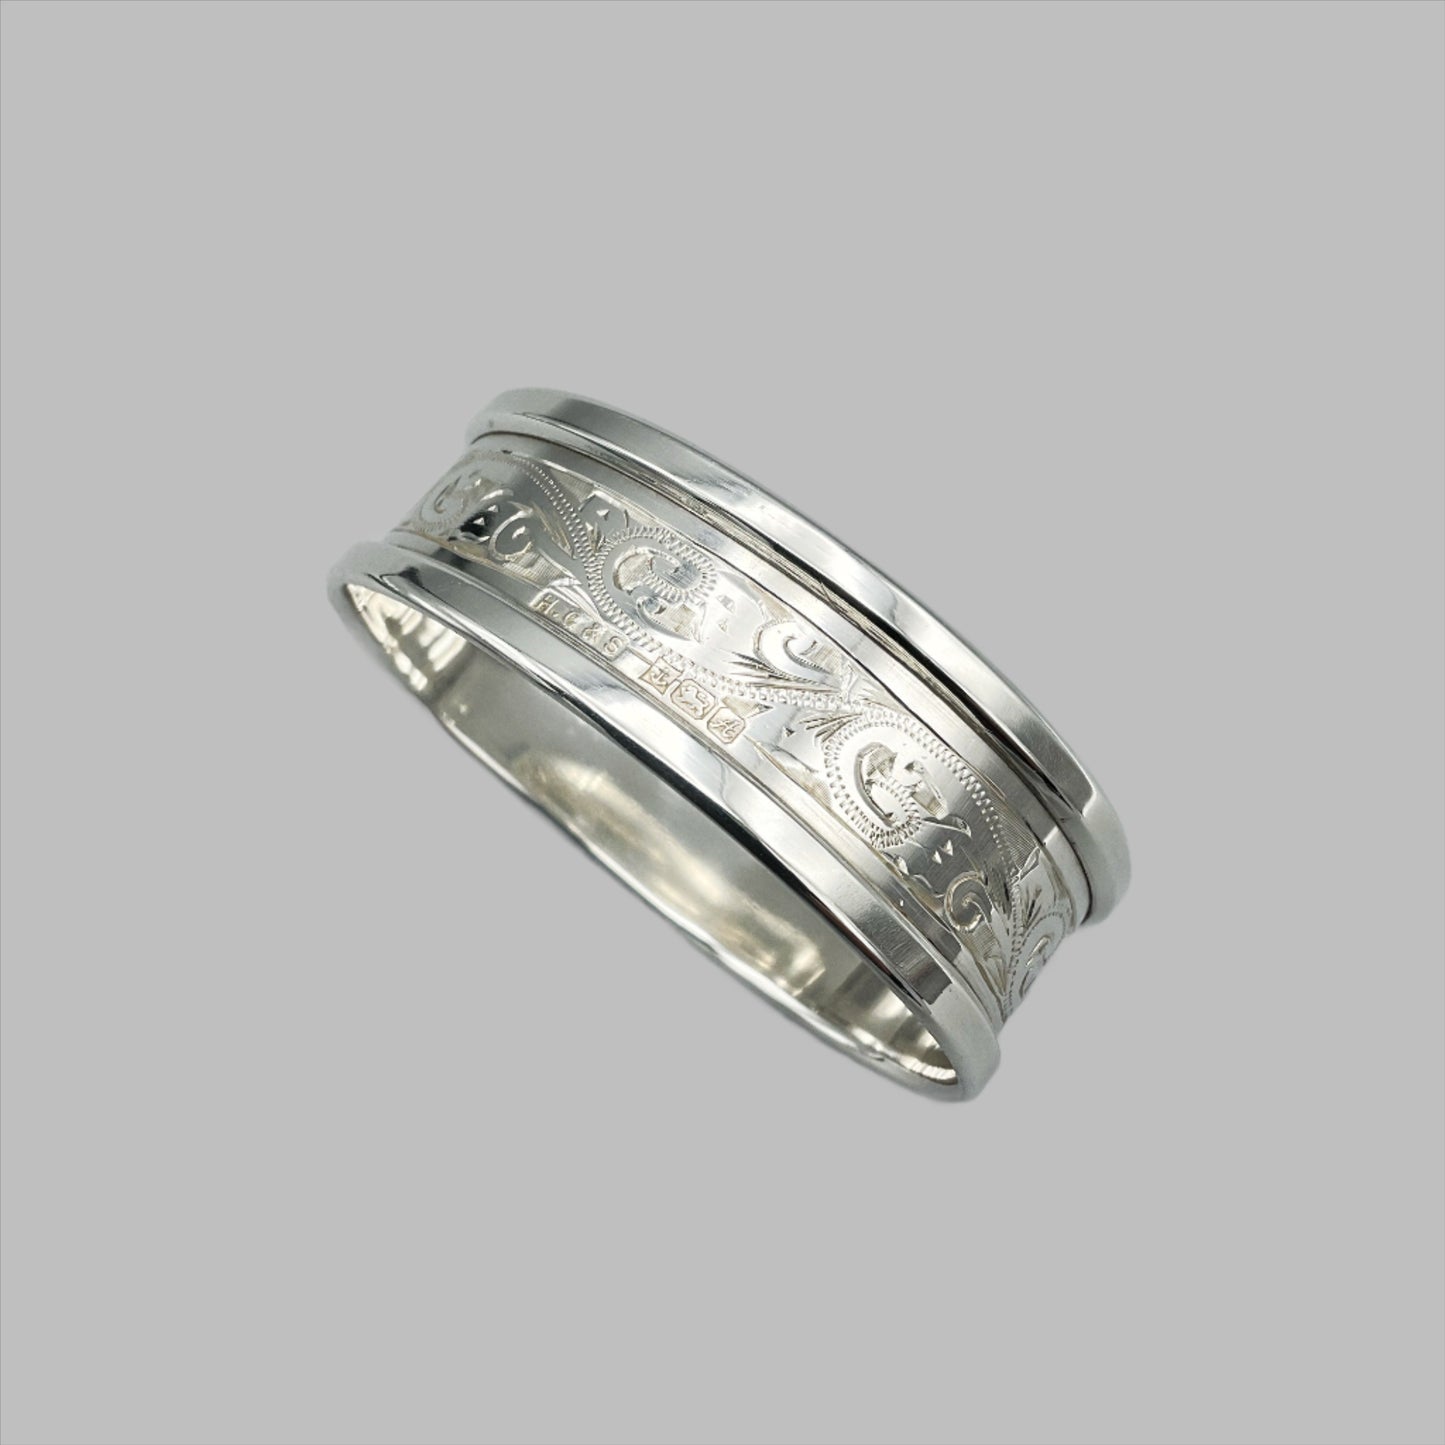 1975 Sterling Silver Napkin Ring